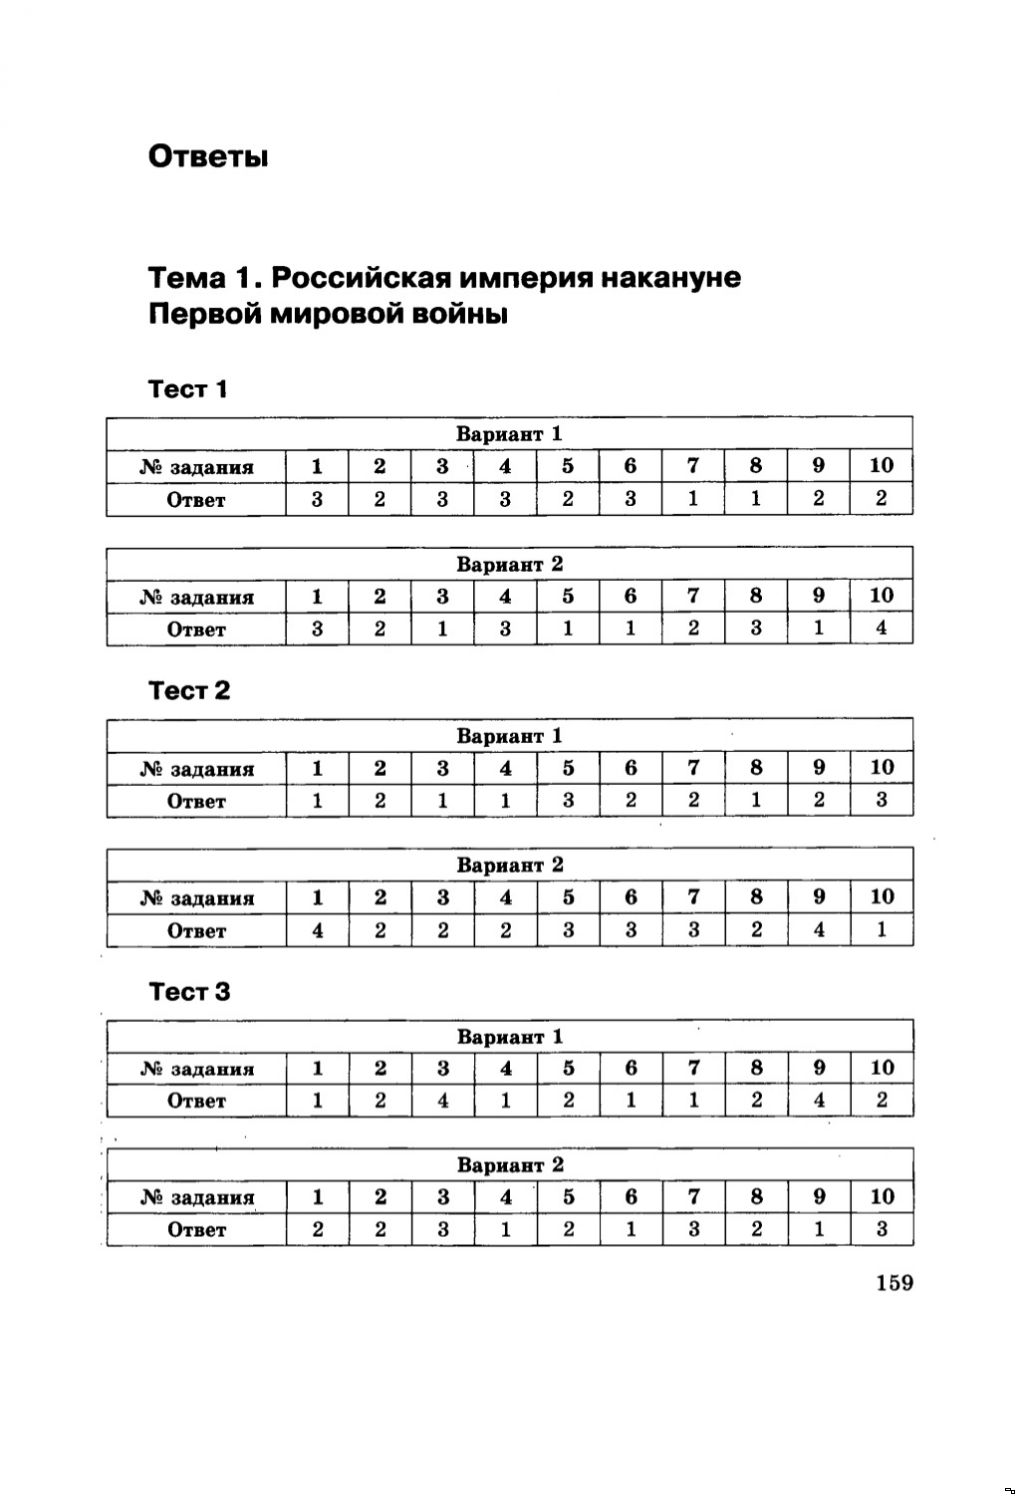 Тест по истории россии загладин 11 класс коллективизация народного хозяйства